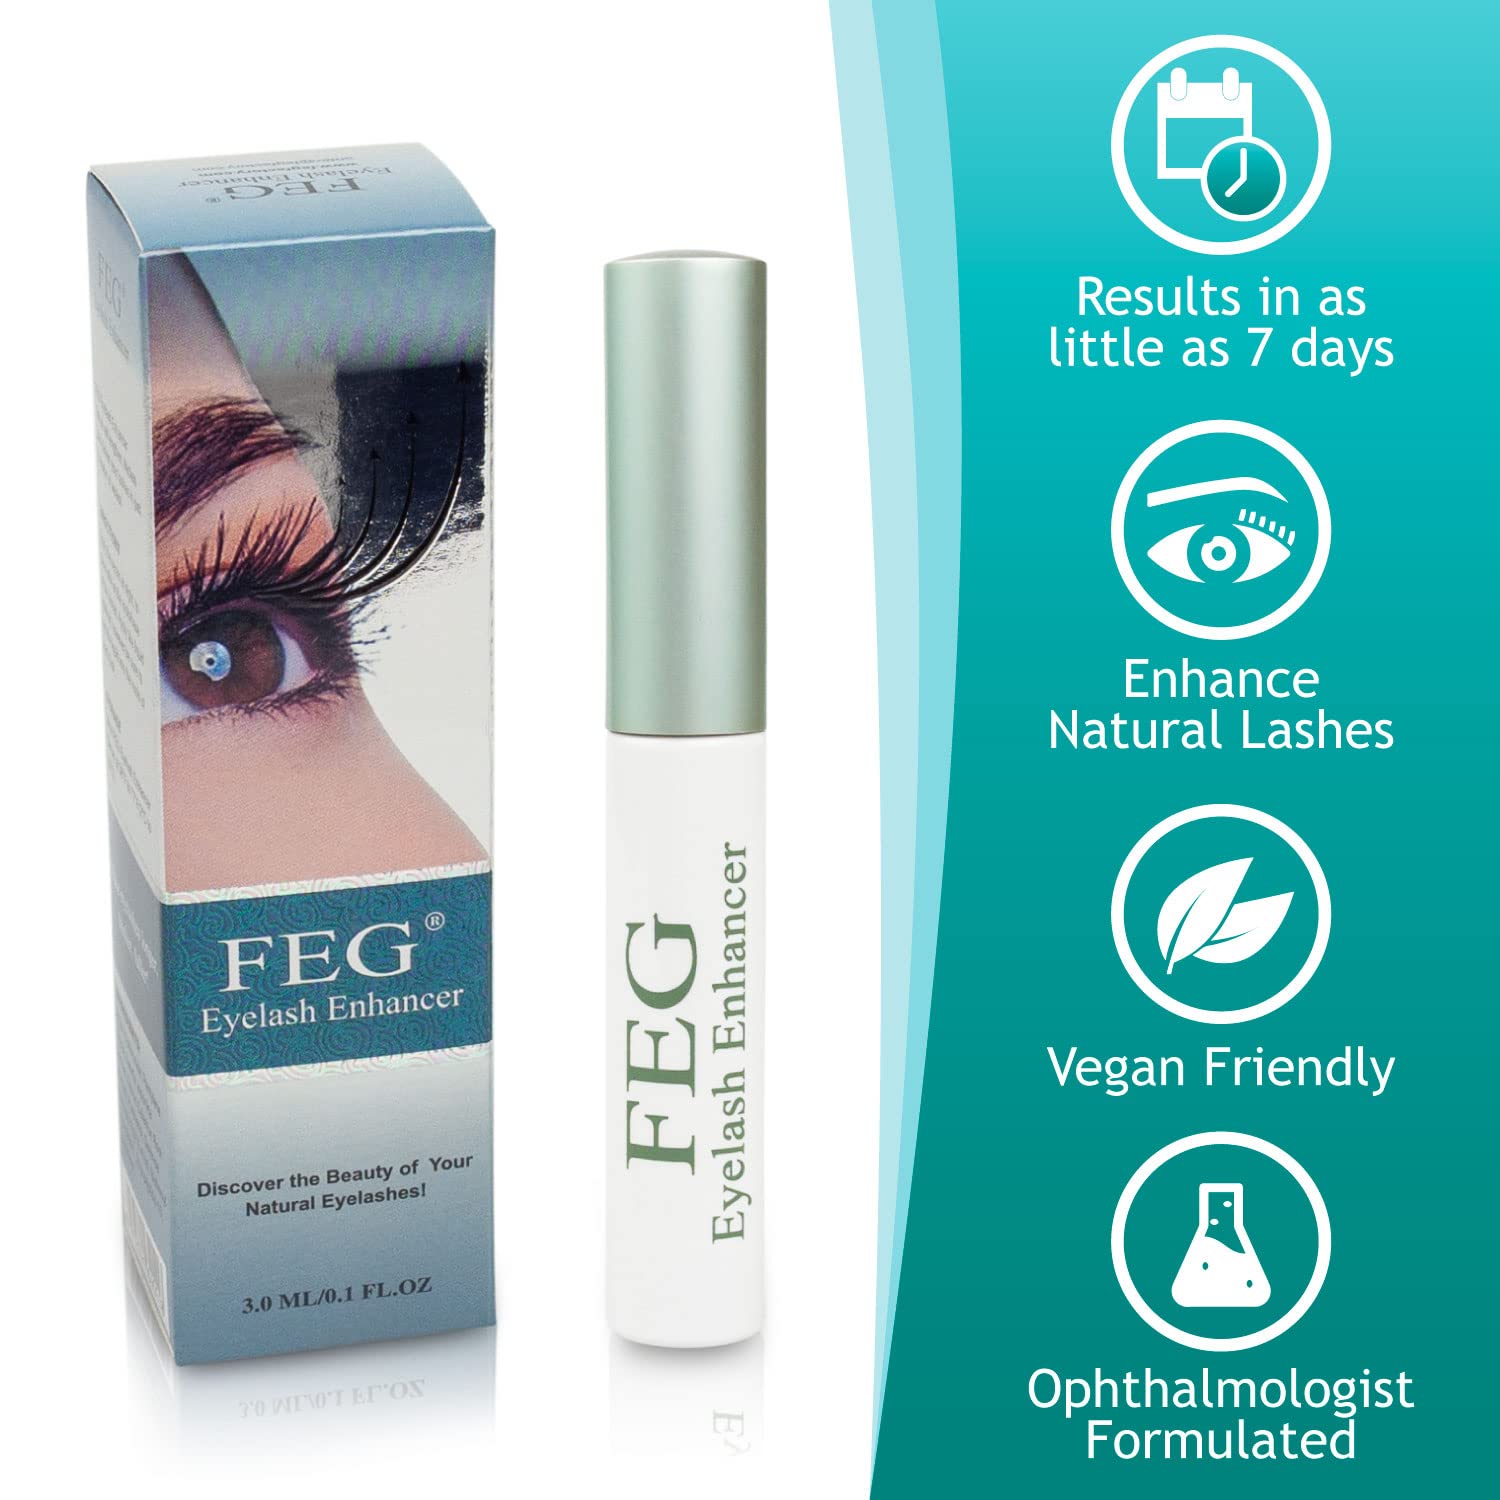 FEG Eyelash Rapid Eye Lash Growth Serum | For Lash and Brow | Creates Appearance of Longer & Darker Eyelashes | Eyelash Enhancing Serum to Help Lengthen, Thicken and Darken Your Lashes | 2 Pack